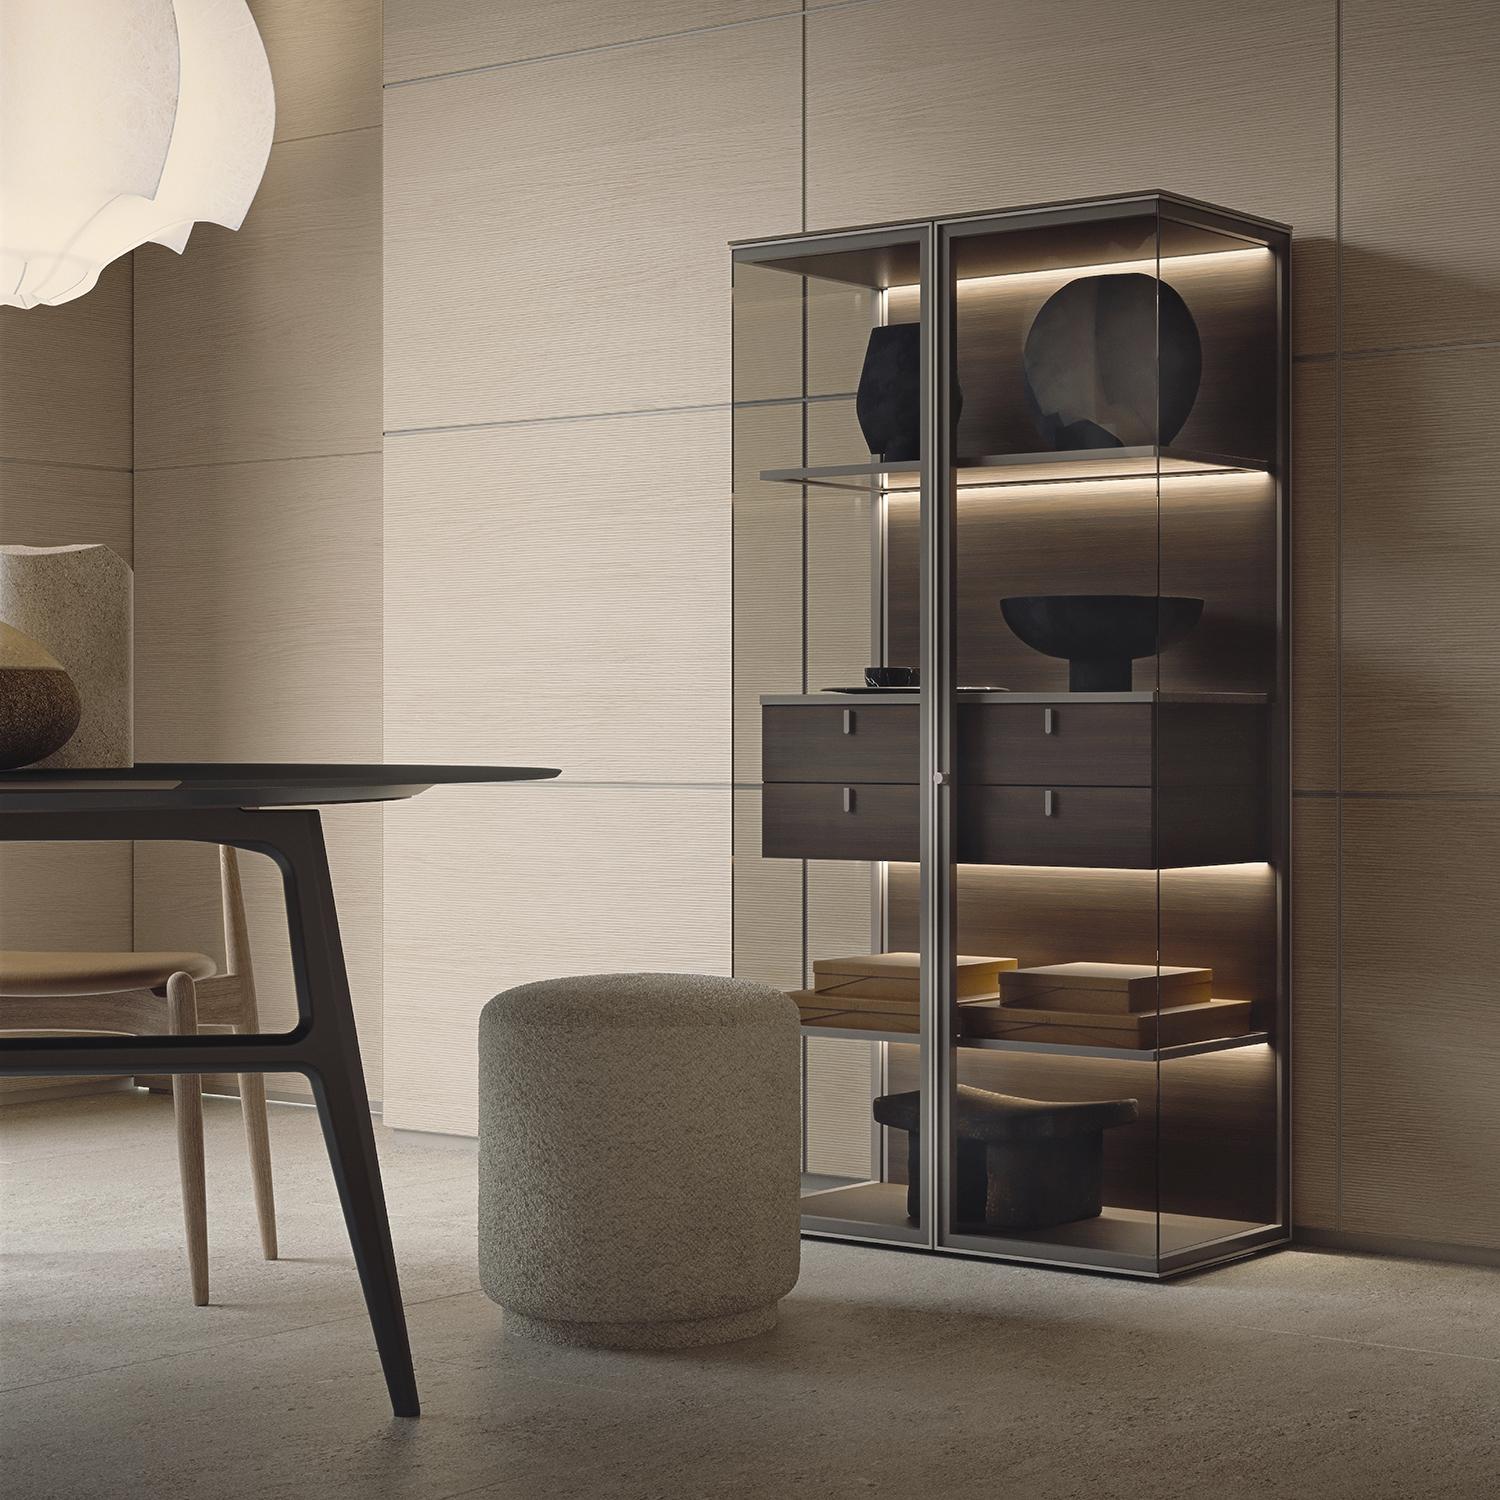 Aliante is a new glazed wardrobe for the living room designed by Giuseppe Bavuso